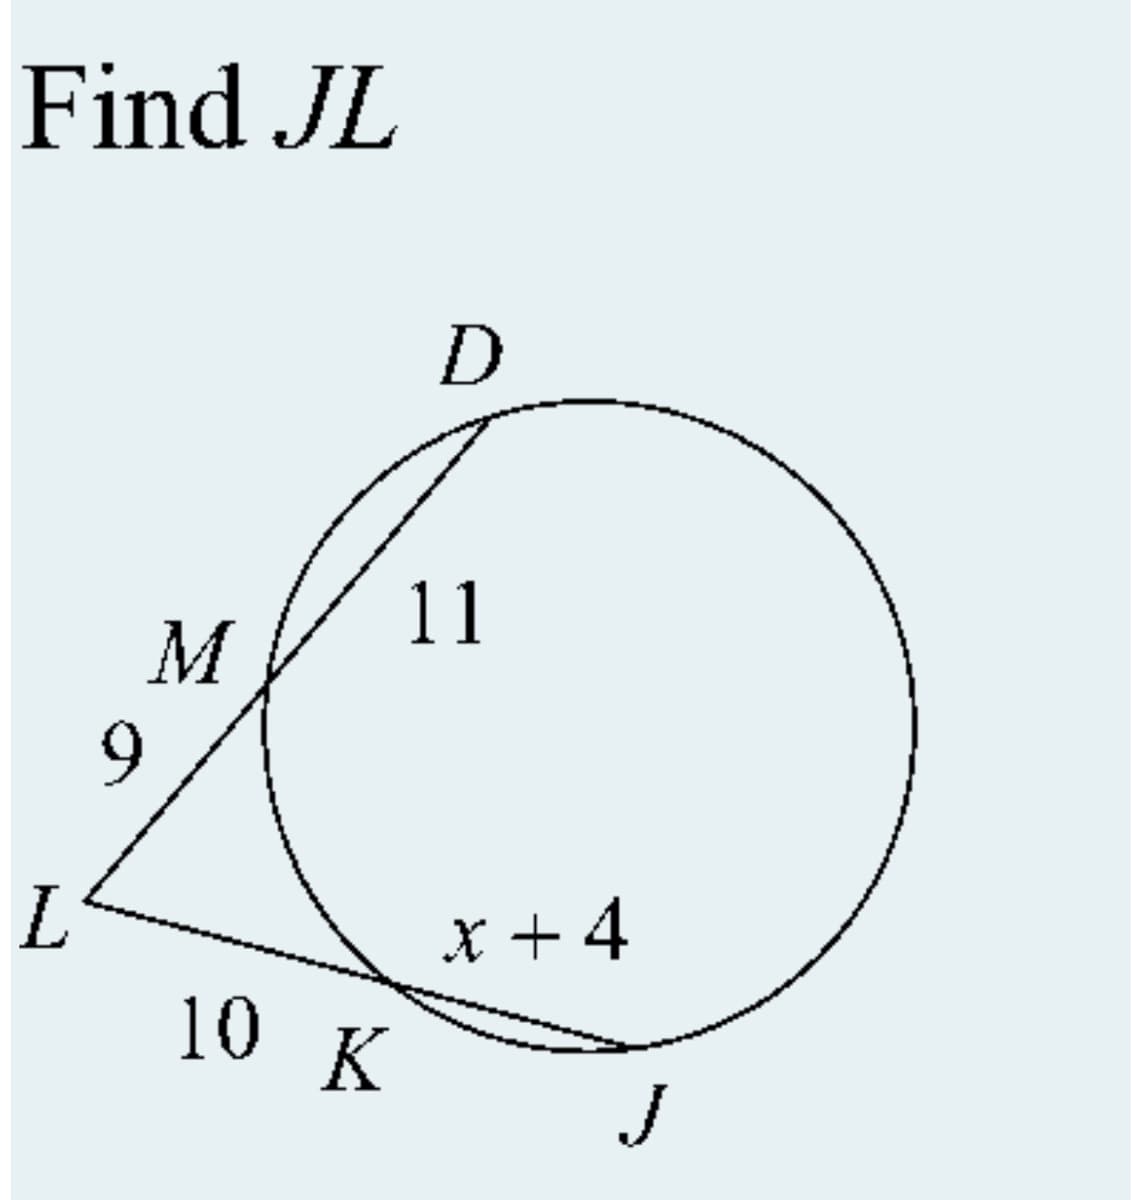 Find JL
D
11
9.
L.
10 K
X + 4
J
